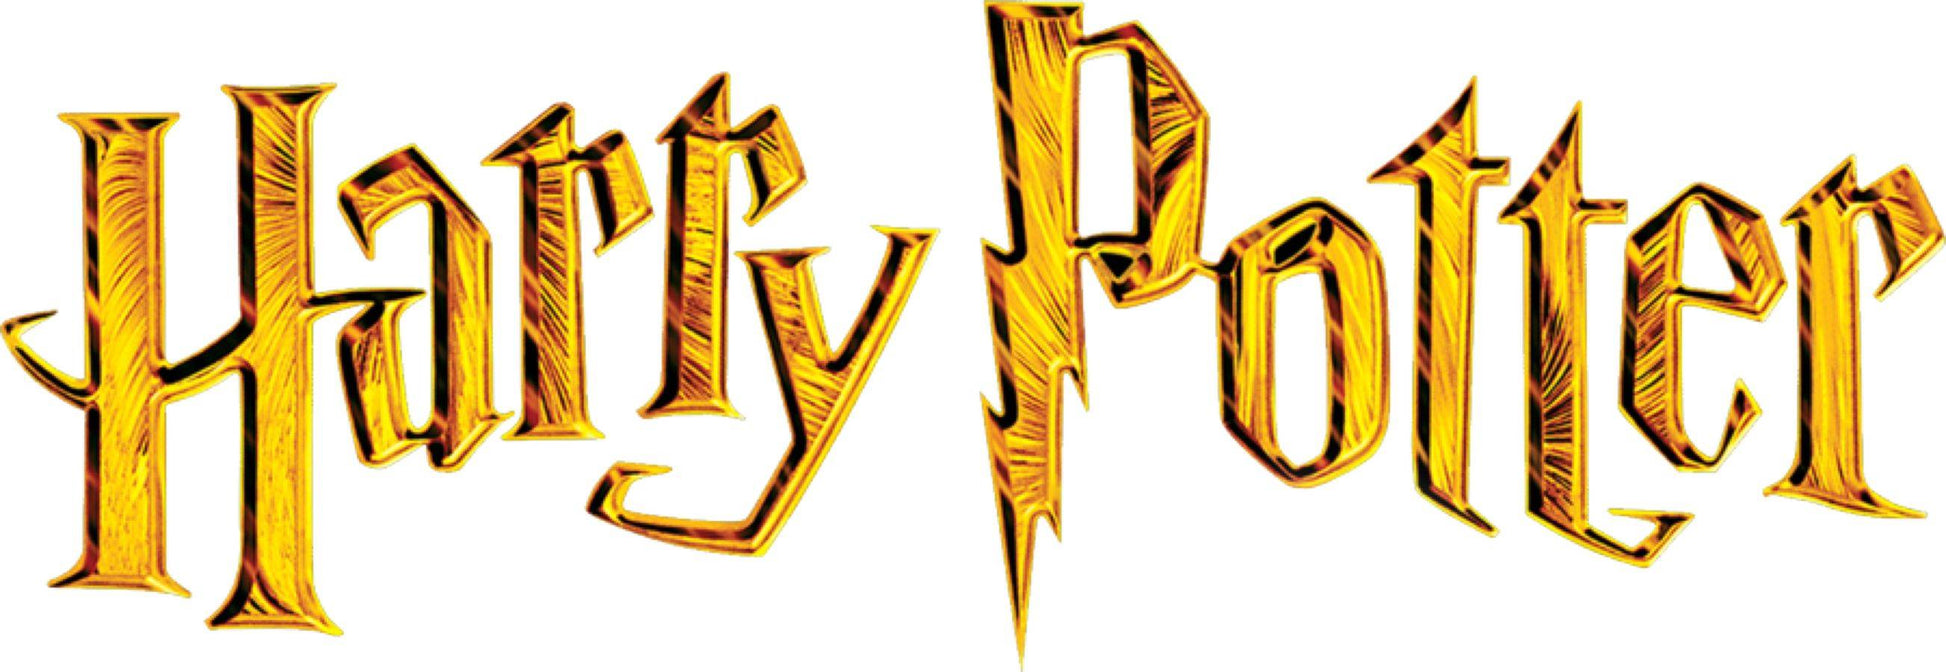 Harry Potter - Harry Potter Chamber of Secrets 20th Anniversary Pop! Vinyl